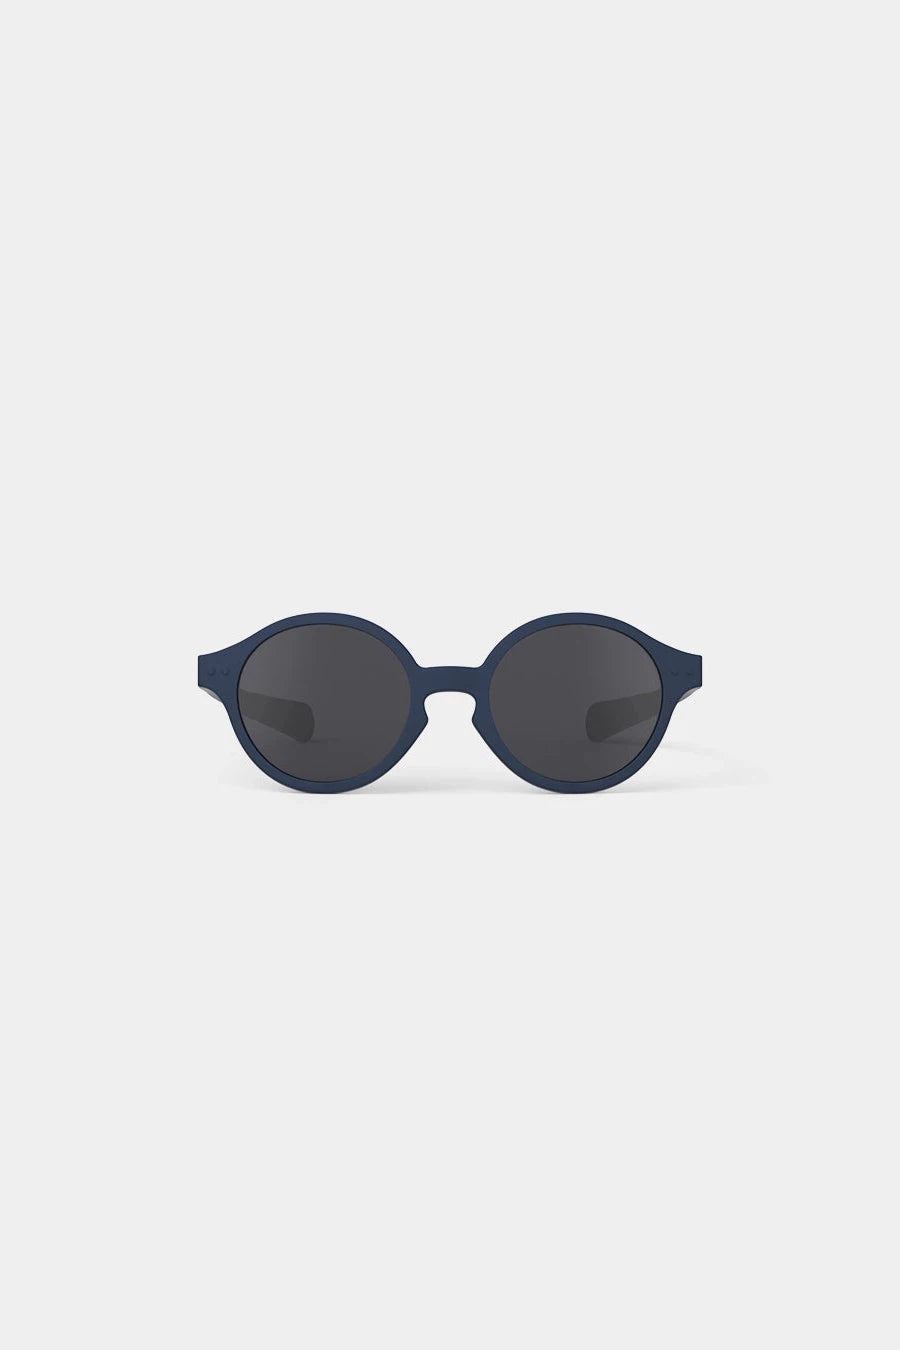 Izipizi BABY Sunglasses Denim Blue - 0-9 mths-Kids-Ohh! By Gum - Shop Sustainable